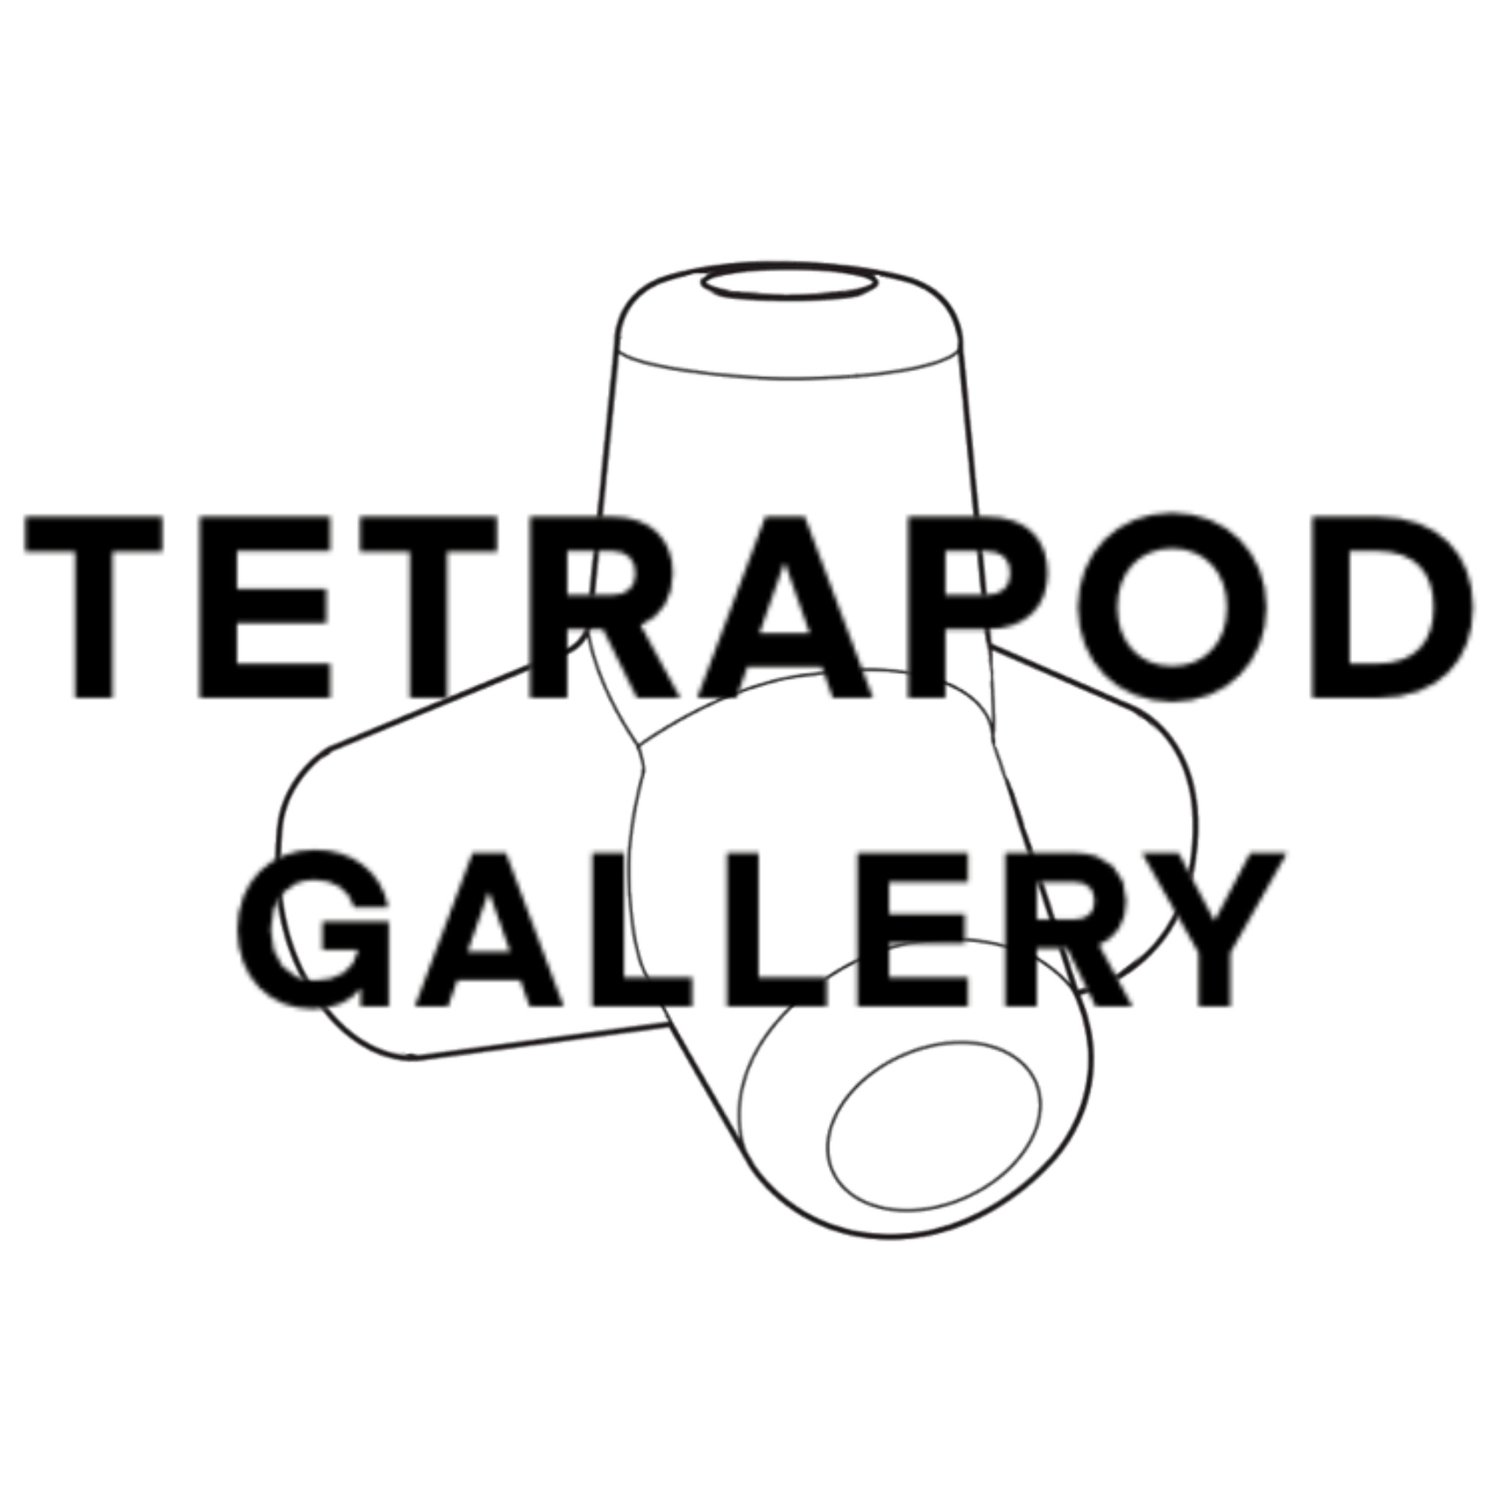 Tetrapod Gallery